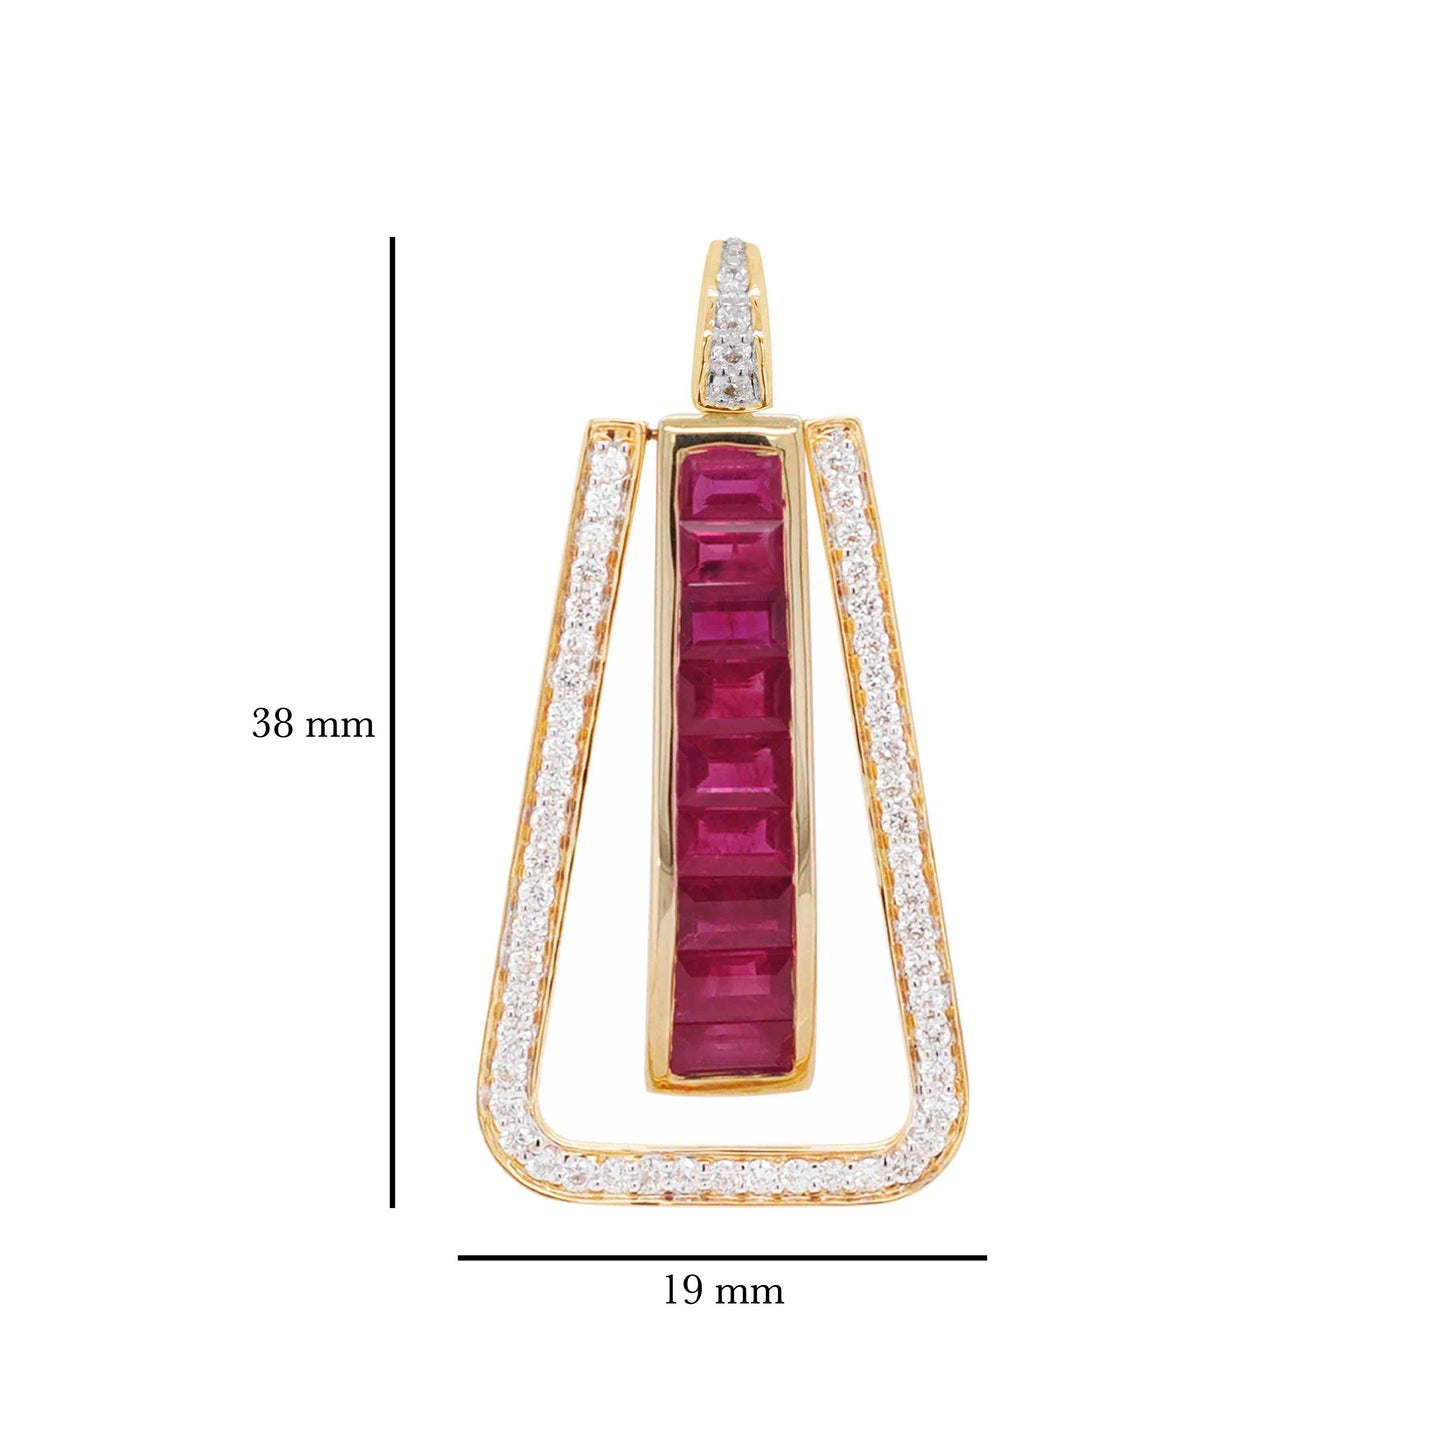 18K Gold Art Deco Channel-Set Ruby Diamond Pendant Necklace - Vaibhav Dhadda Jewelry